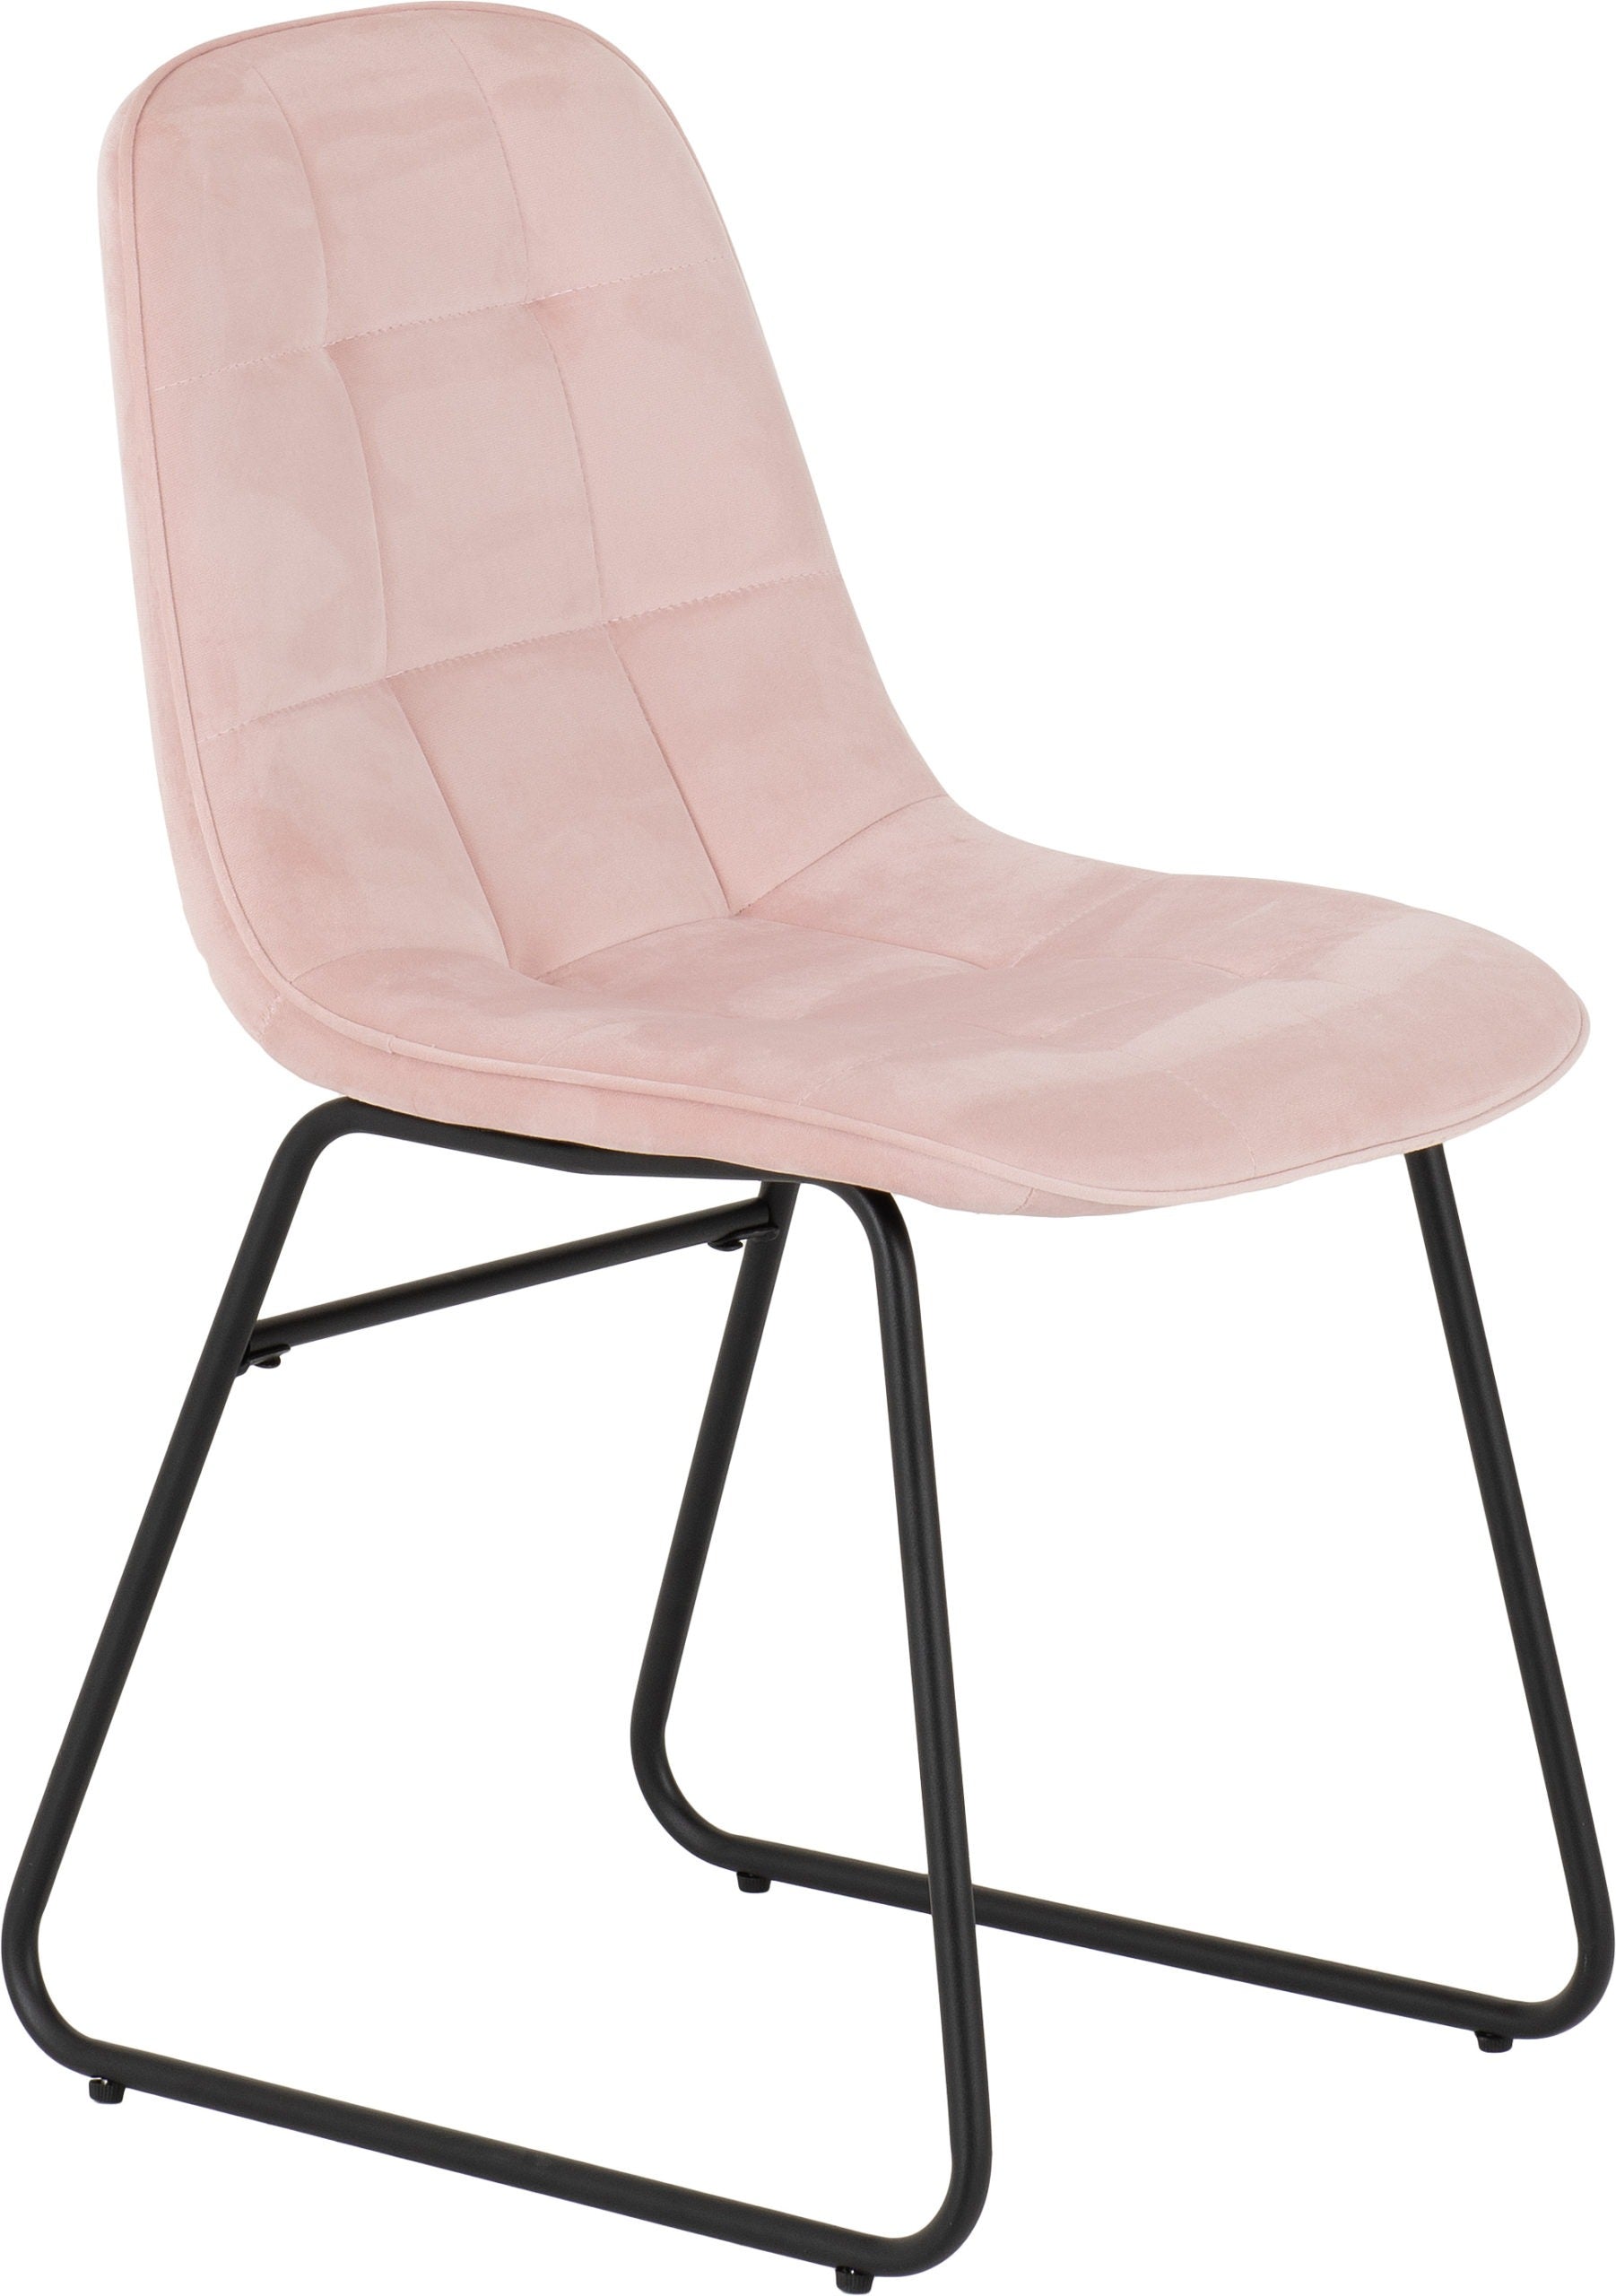 Lukas Chair - Baby Pink Velvet